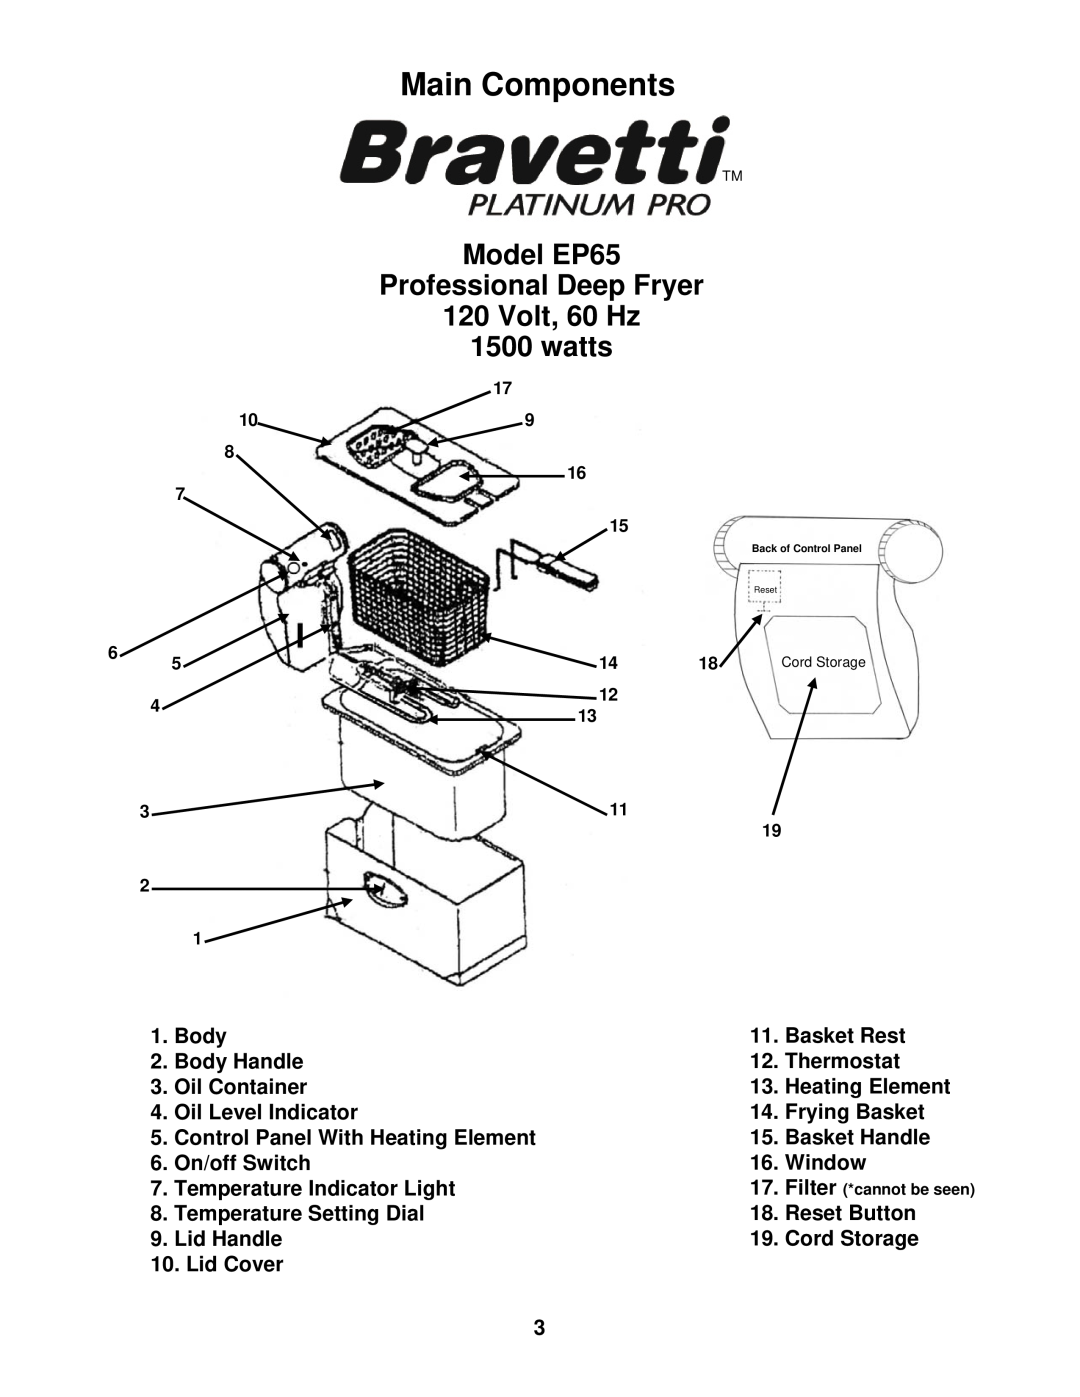 Bravetti manual Main Components, Model EP65, Professional Deep Fryer, Volt, 60 Hz, watts 